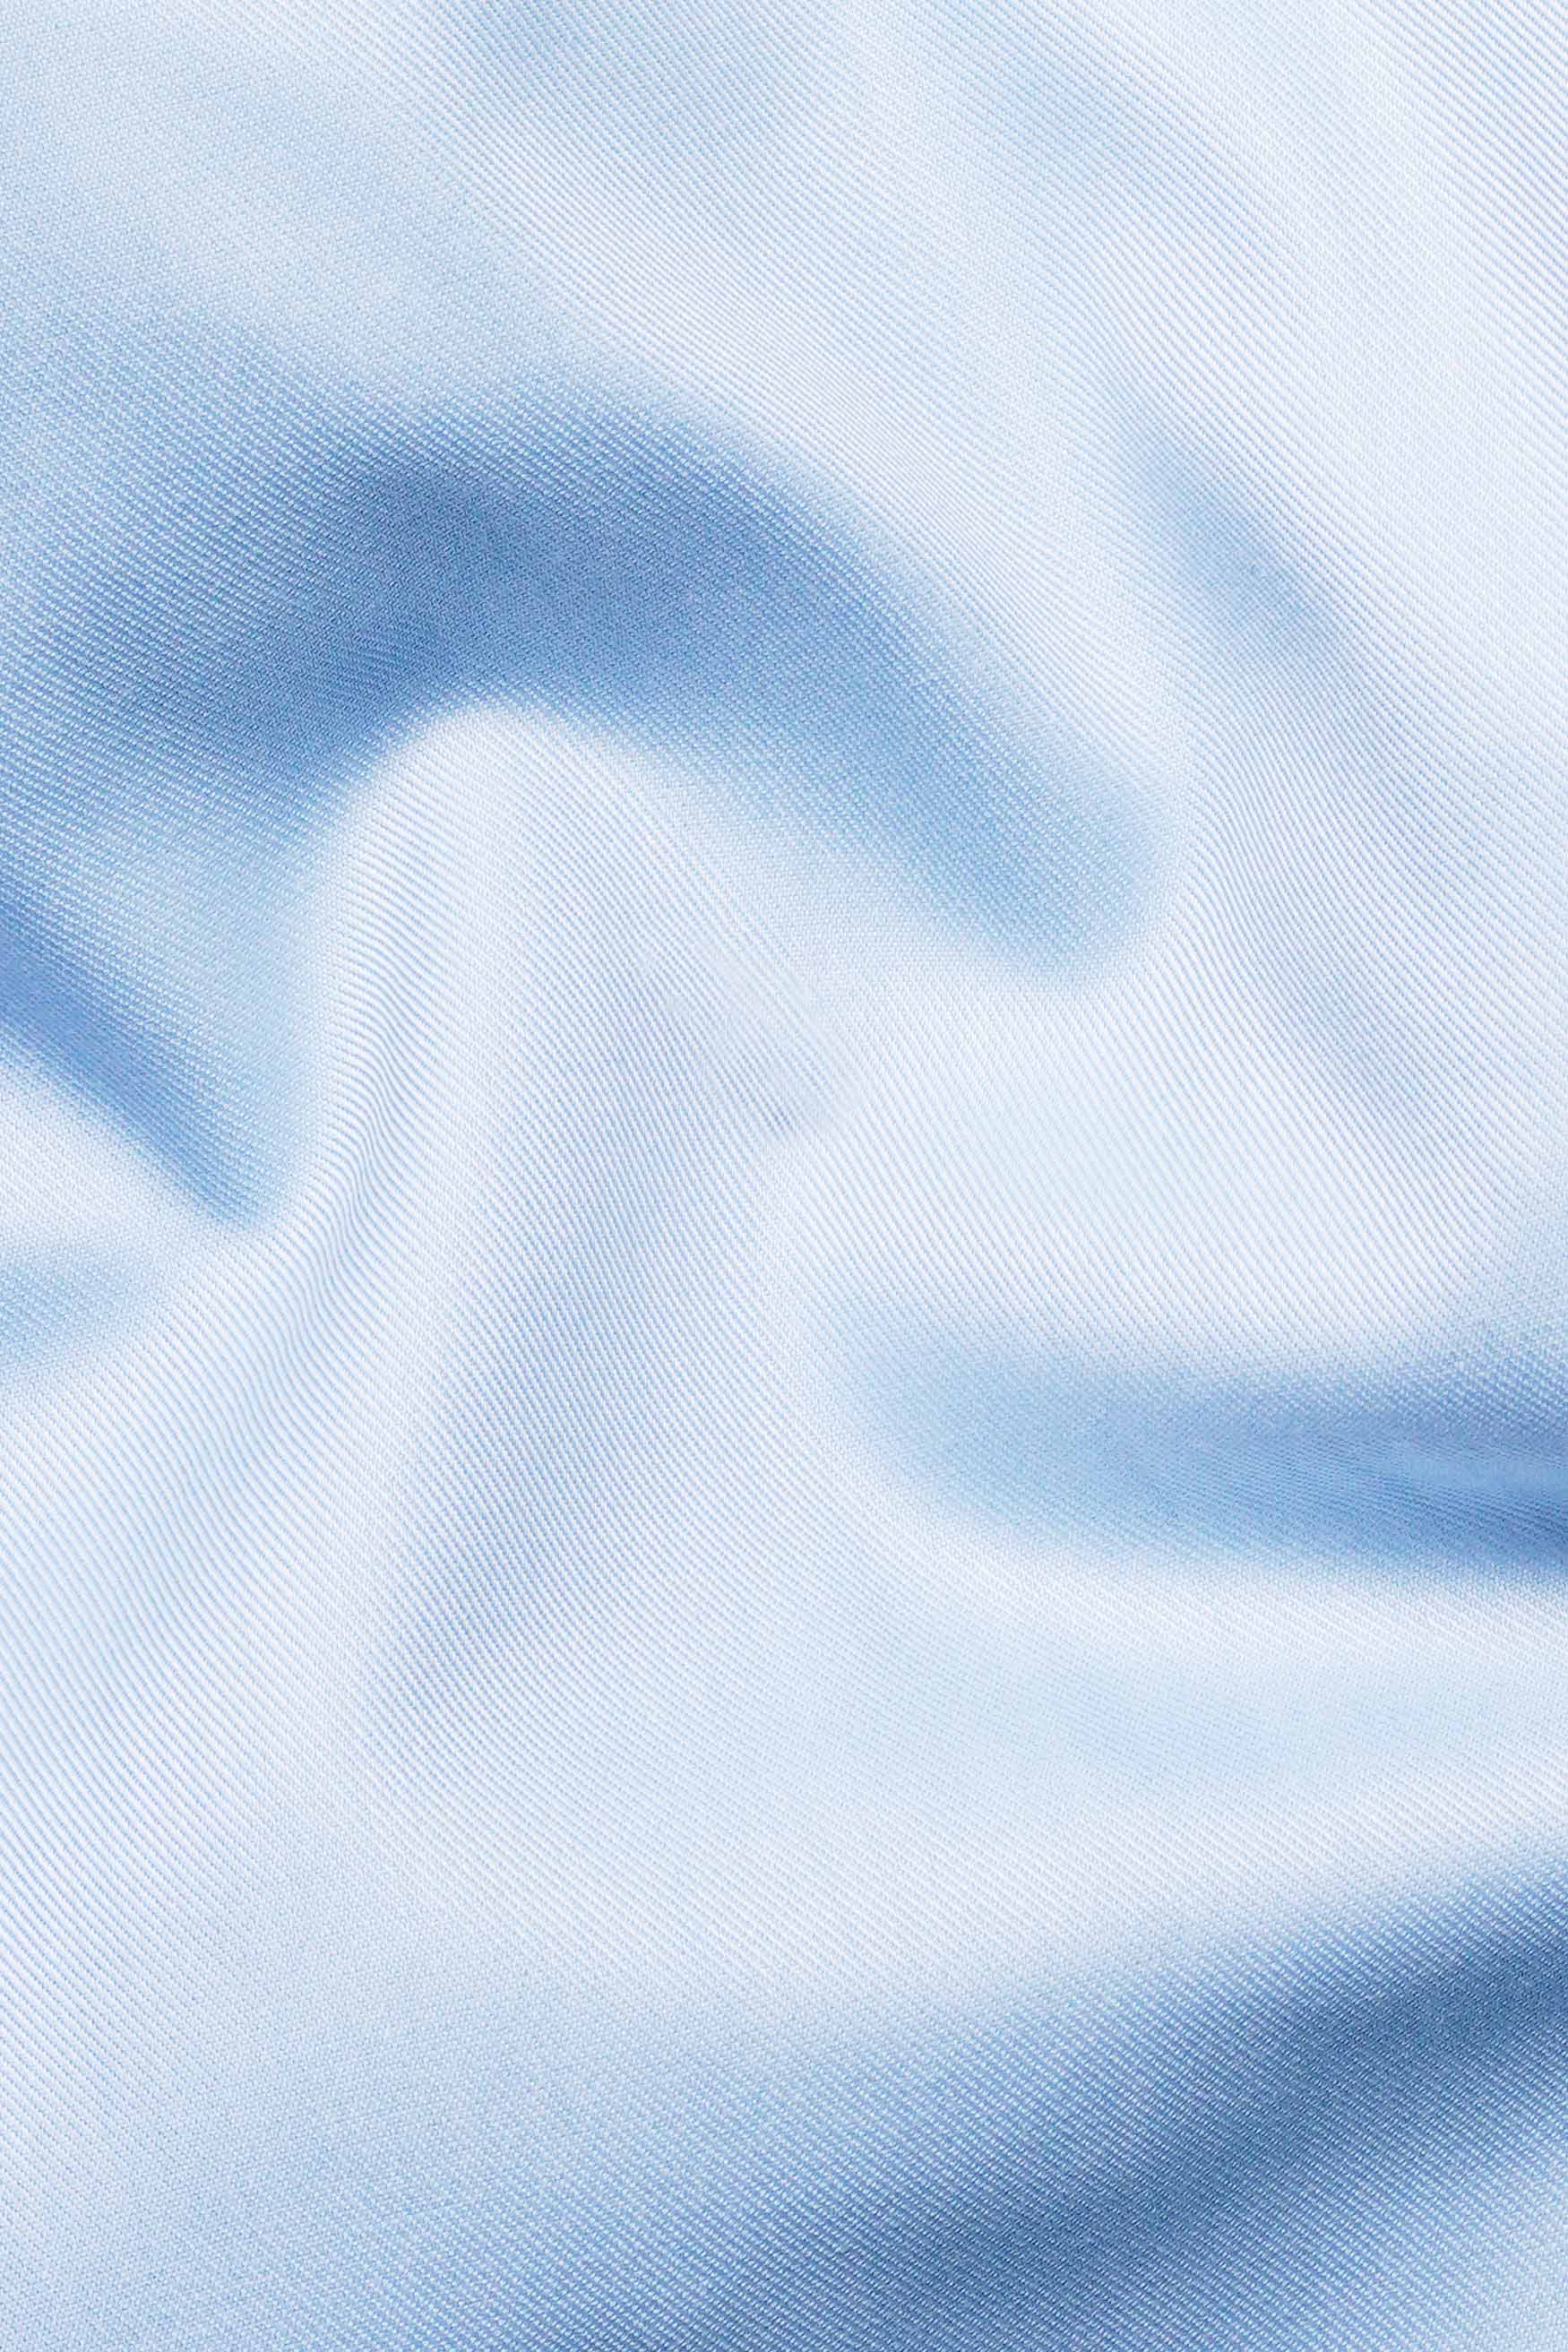 Aqua Blue Twill Premium Cotton Shirt